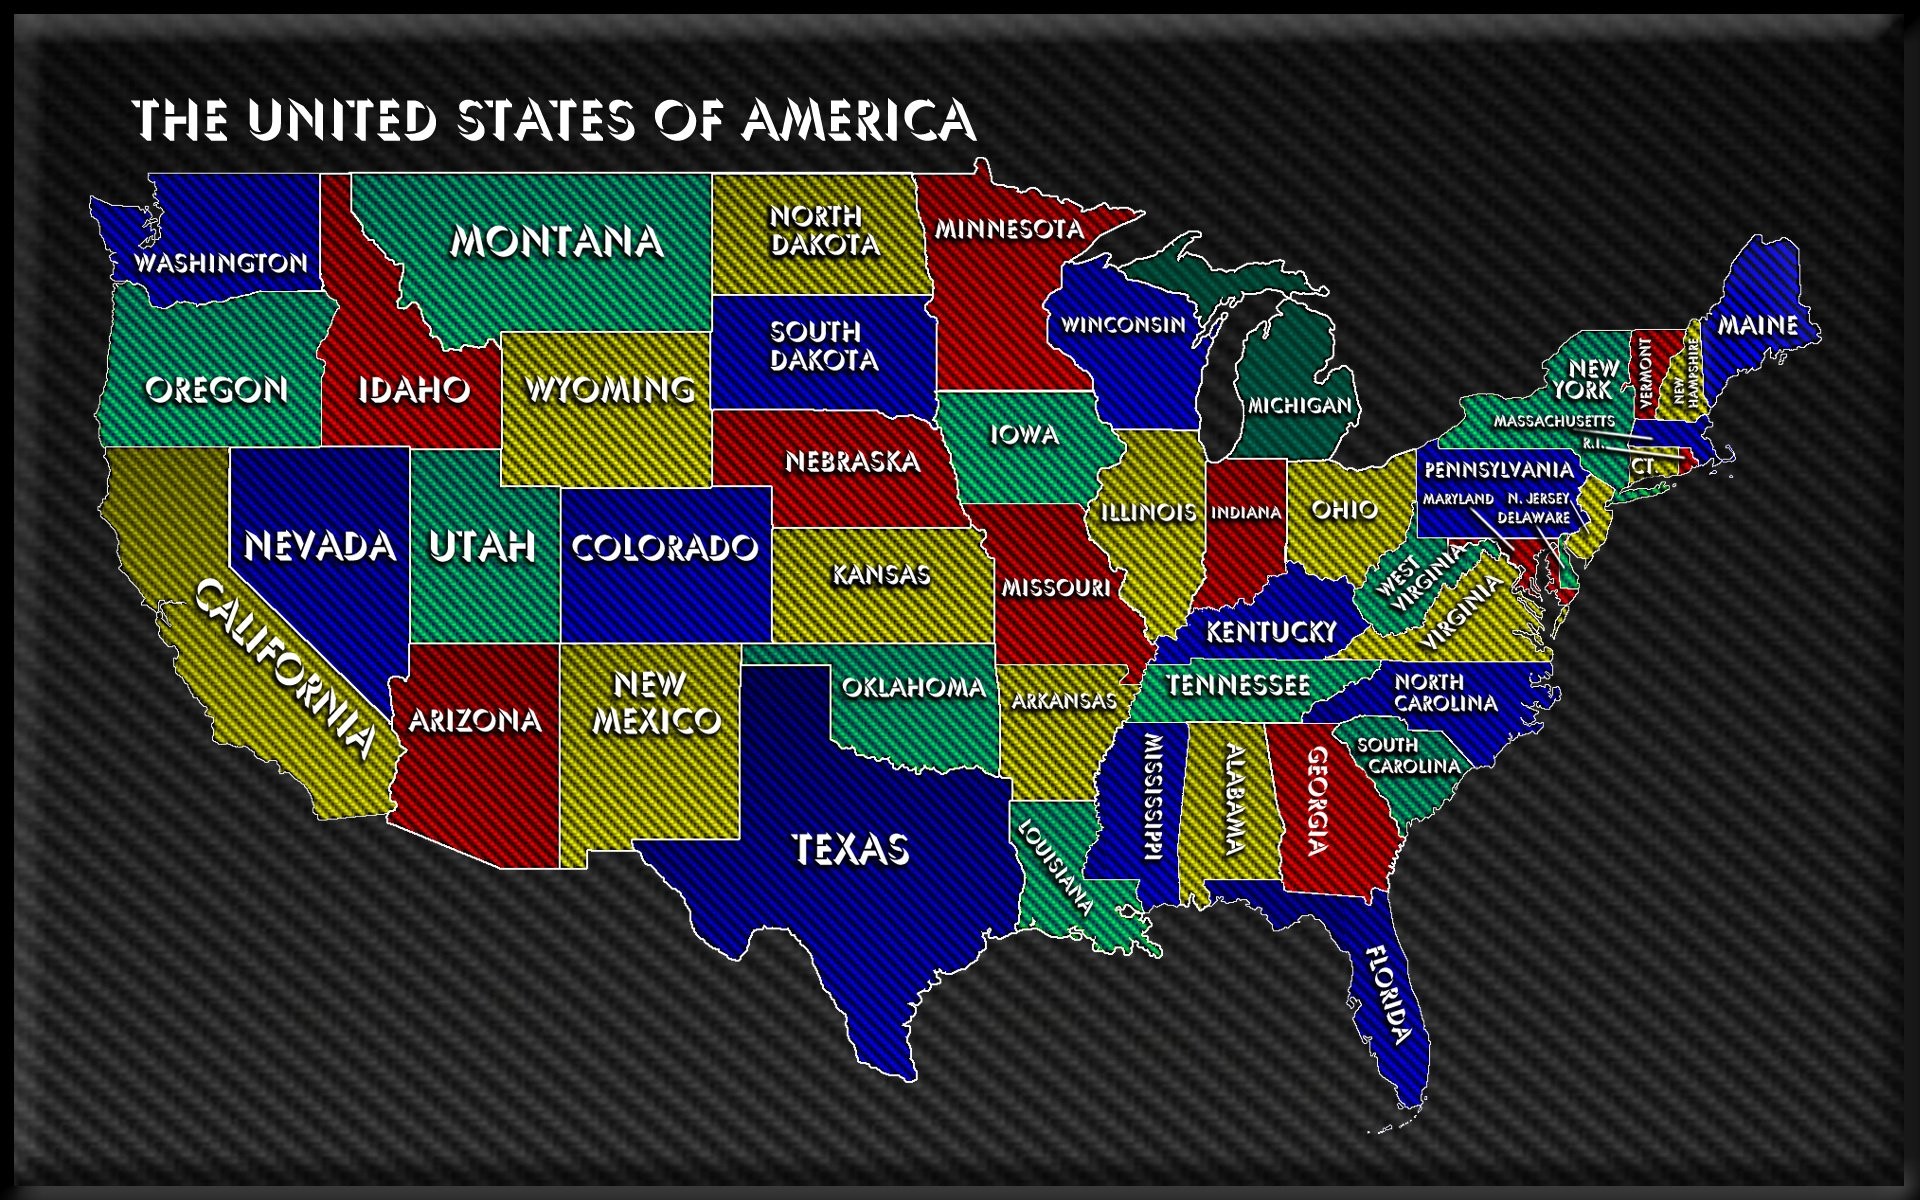 States of america. The United States of America карта. Штаты США. Флаги Штатов США. Карта США со Штатами.